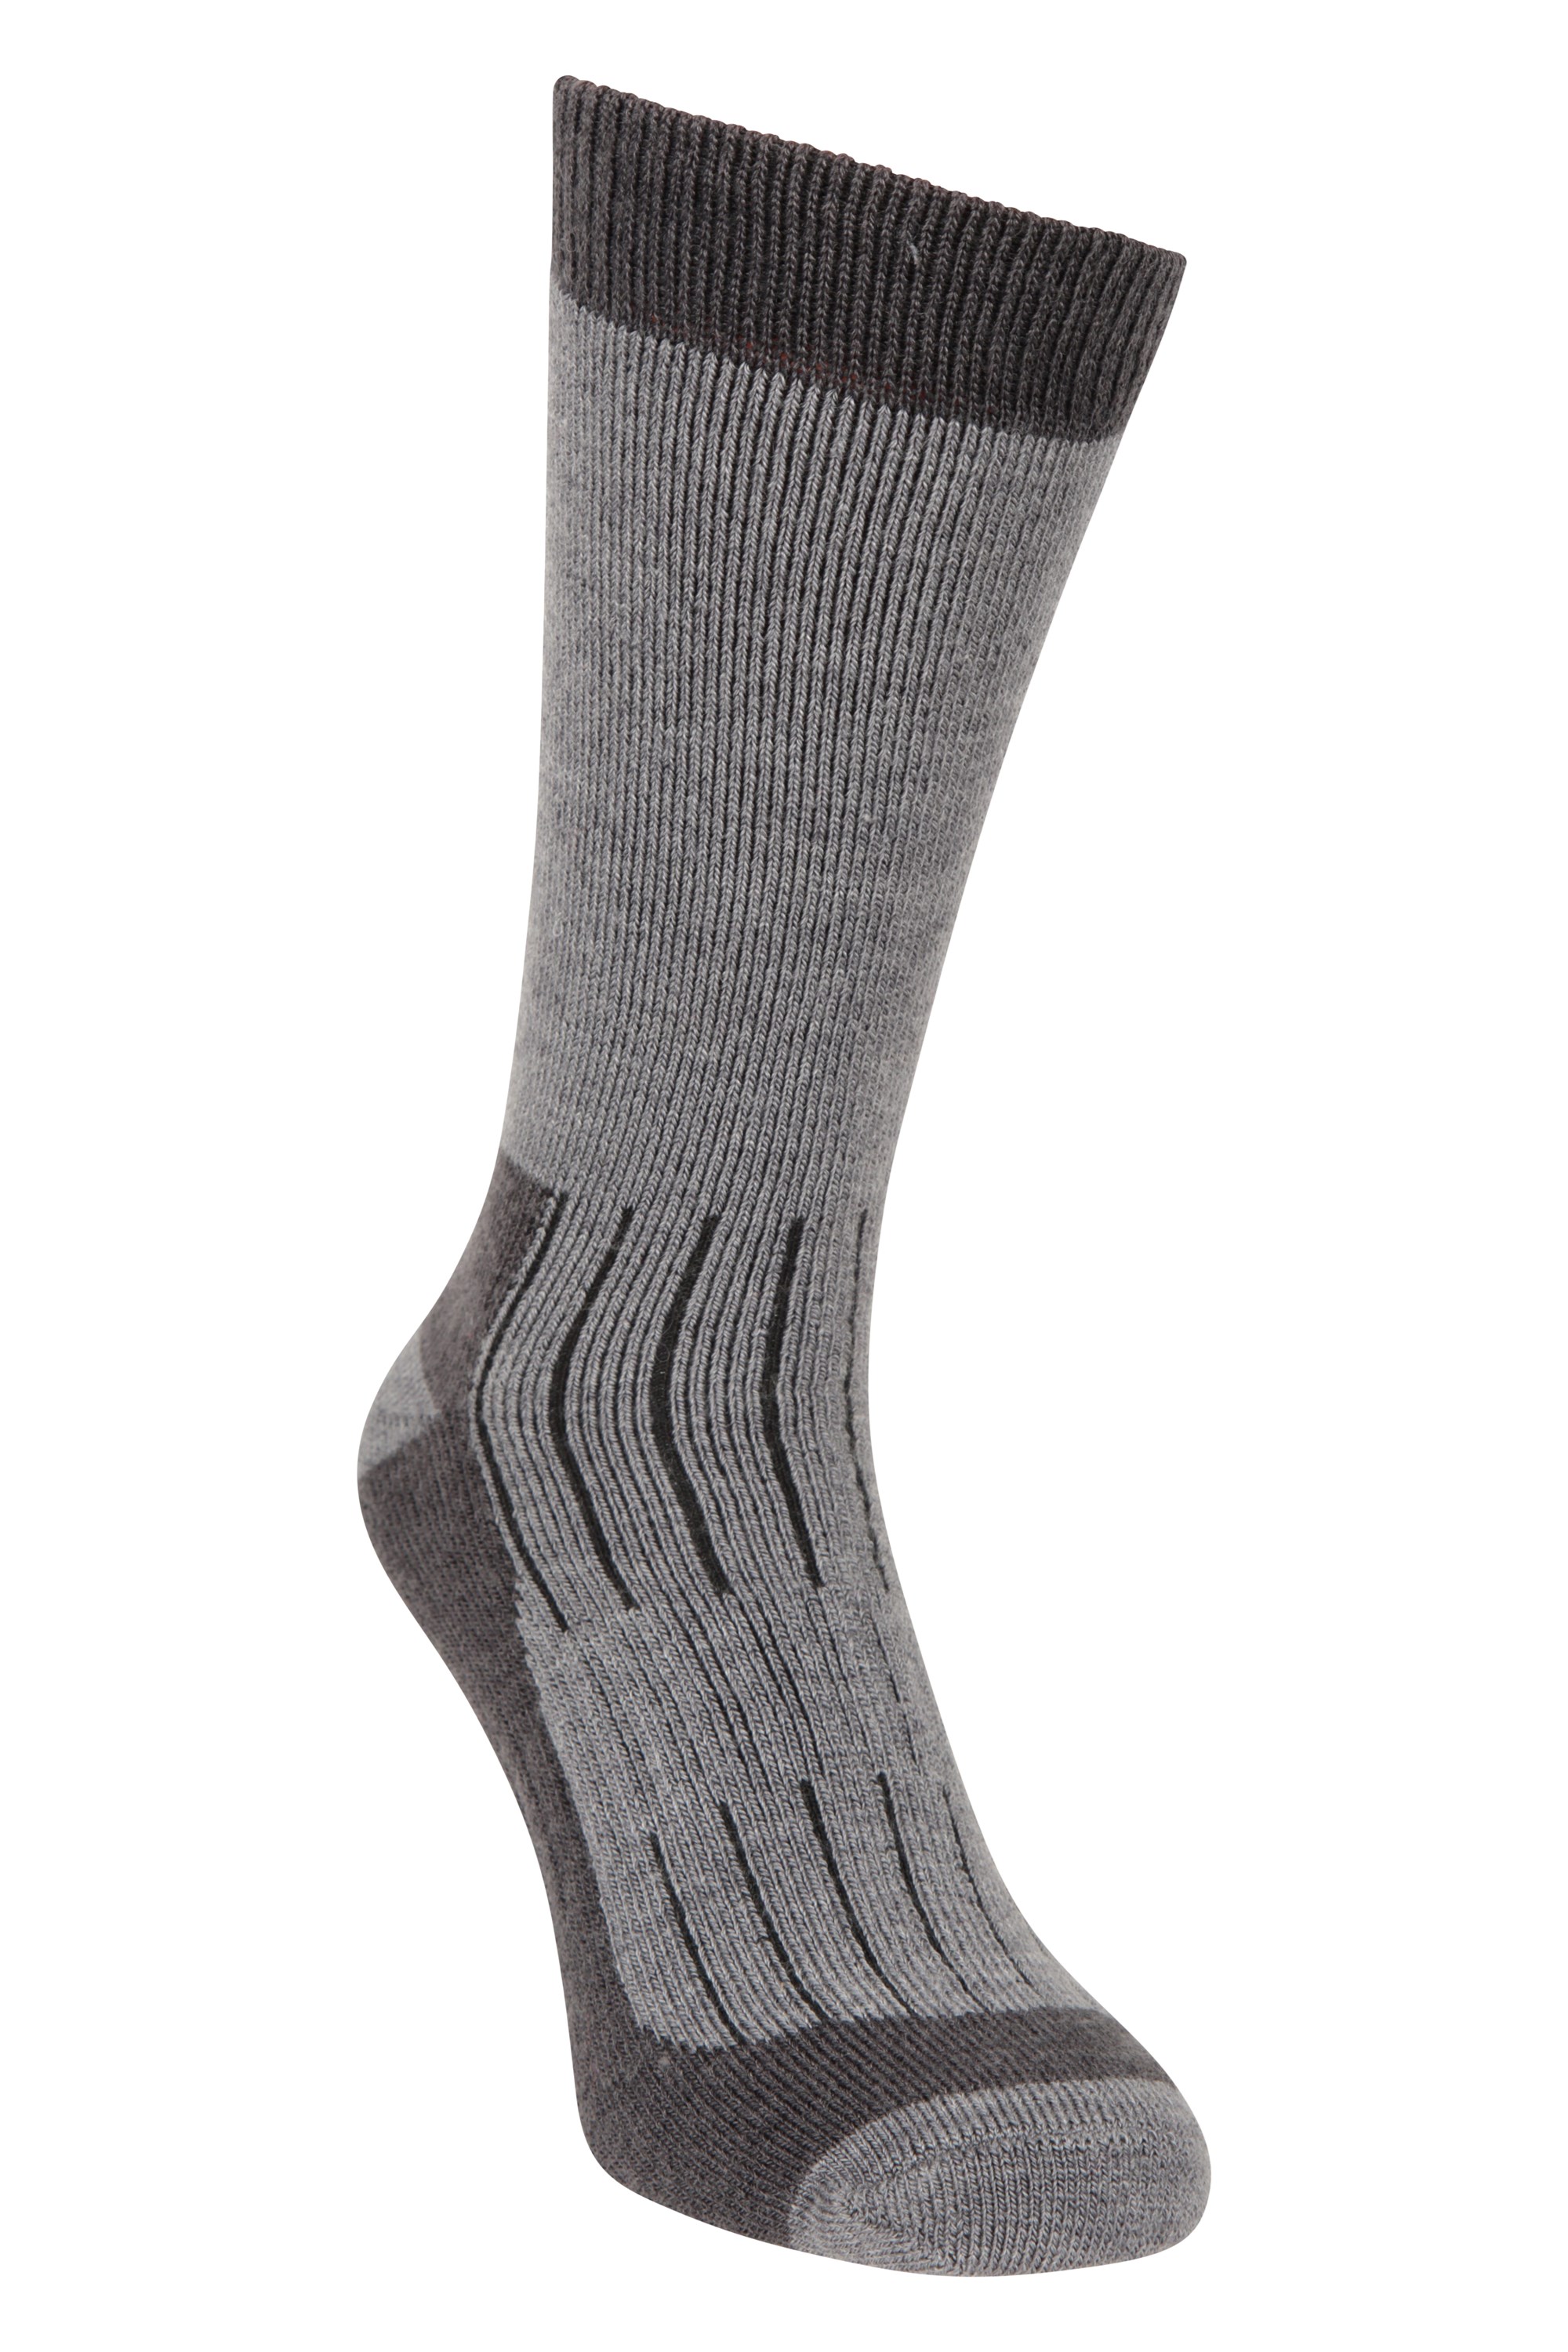 Explorer Mens Merino Mid-Calf Socks - Grey